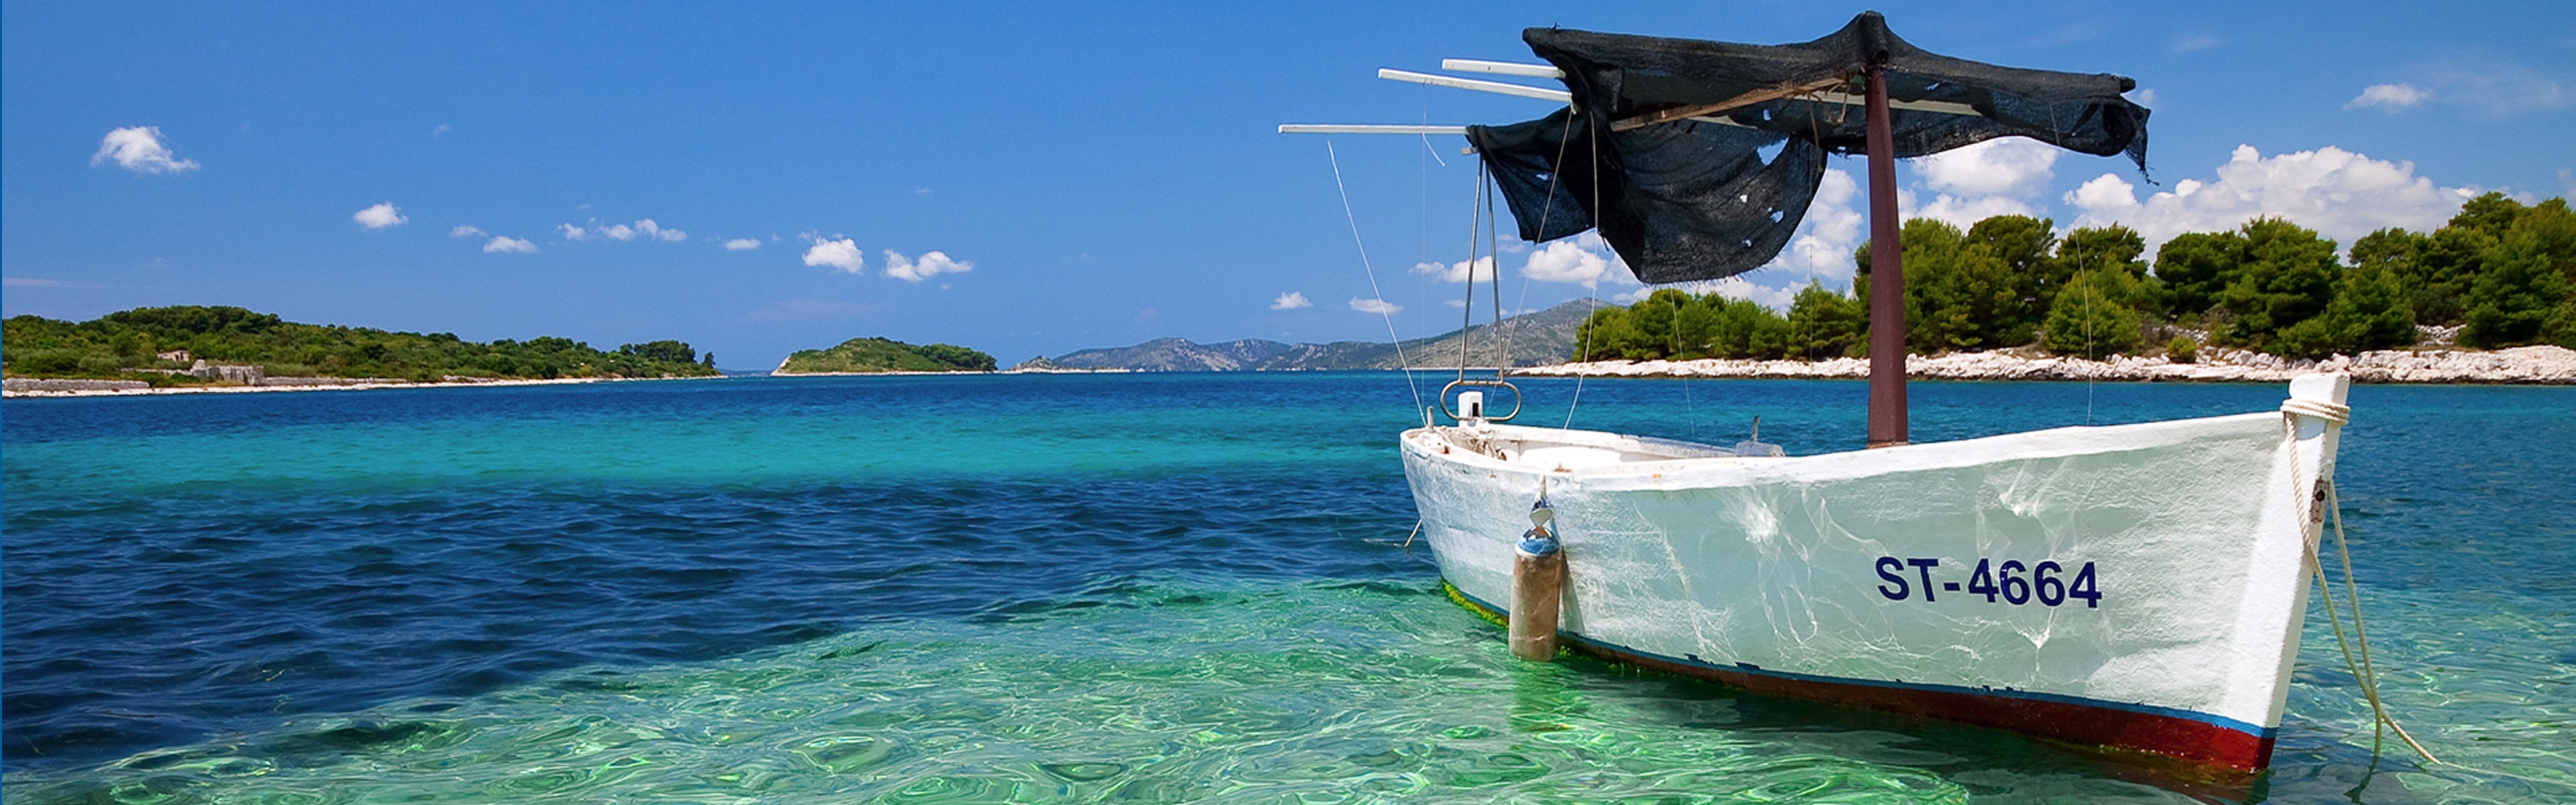 Pleasure Boat: A watercraft for short entertainment trips, Islands. 3840x1200 Dual Screen Wallpaper.